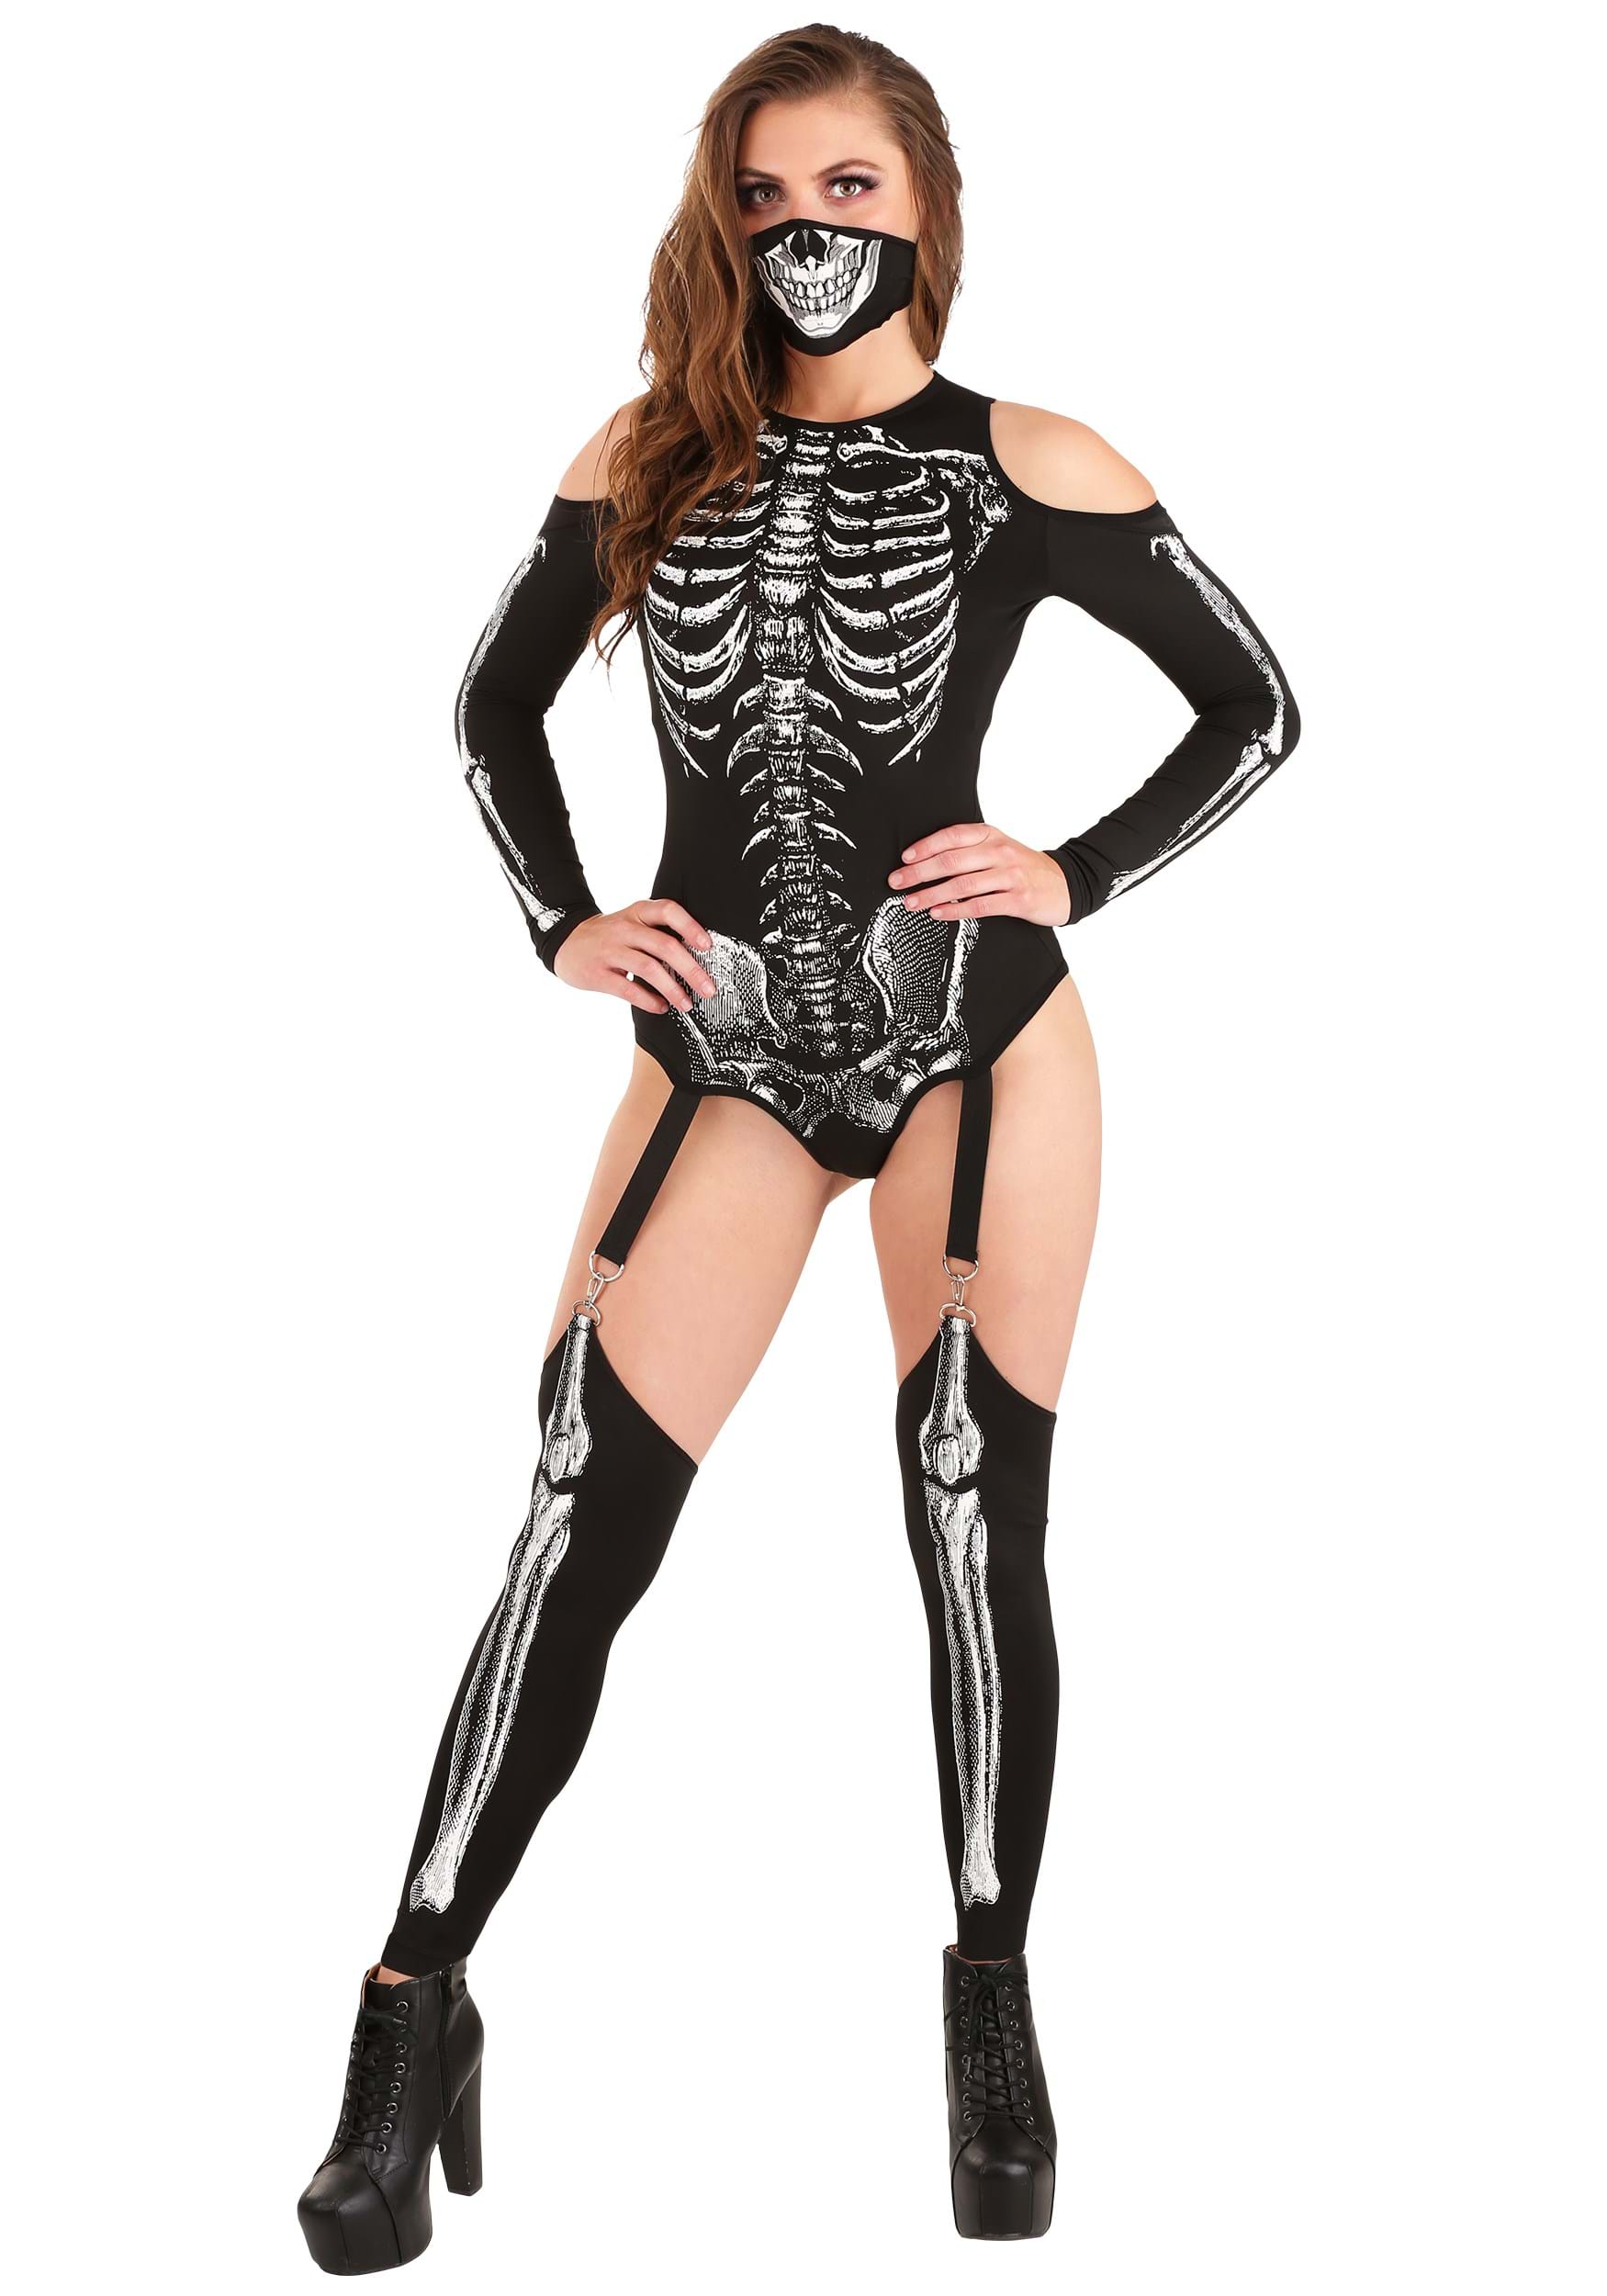 https://images.halloween.com/products/46422/2-1-167698/skeleton-bodysuit-womens-costume-alt-5.jpg